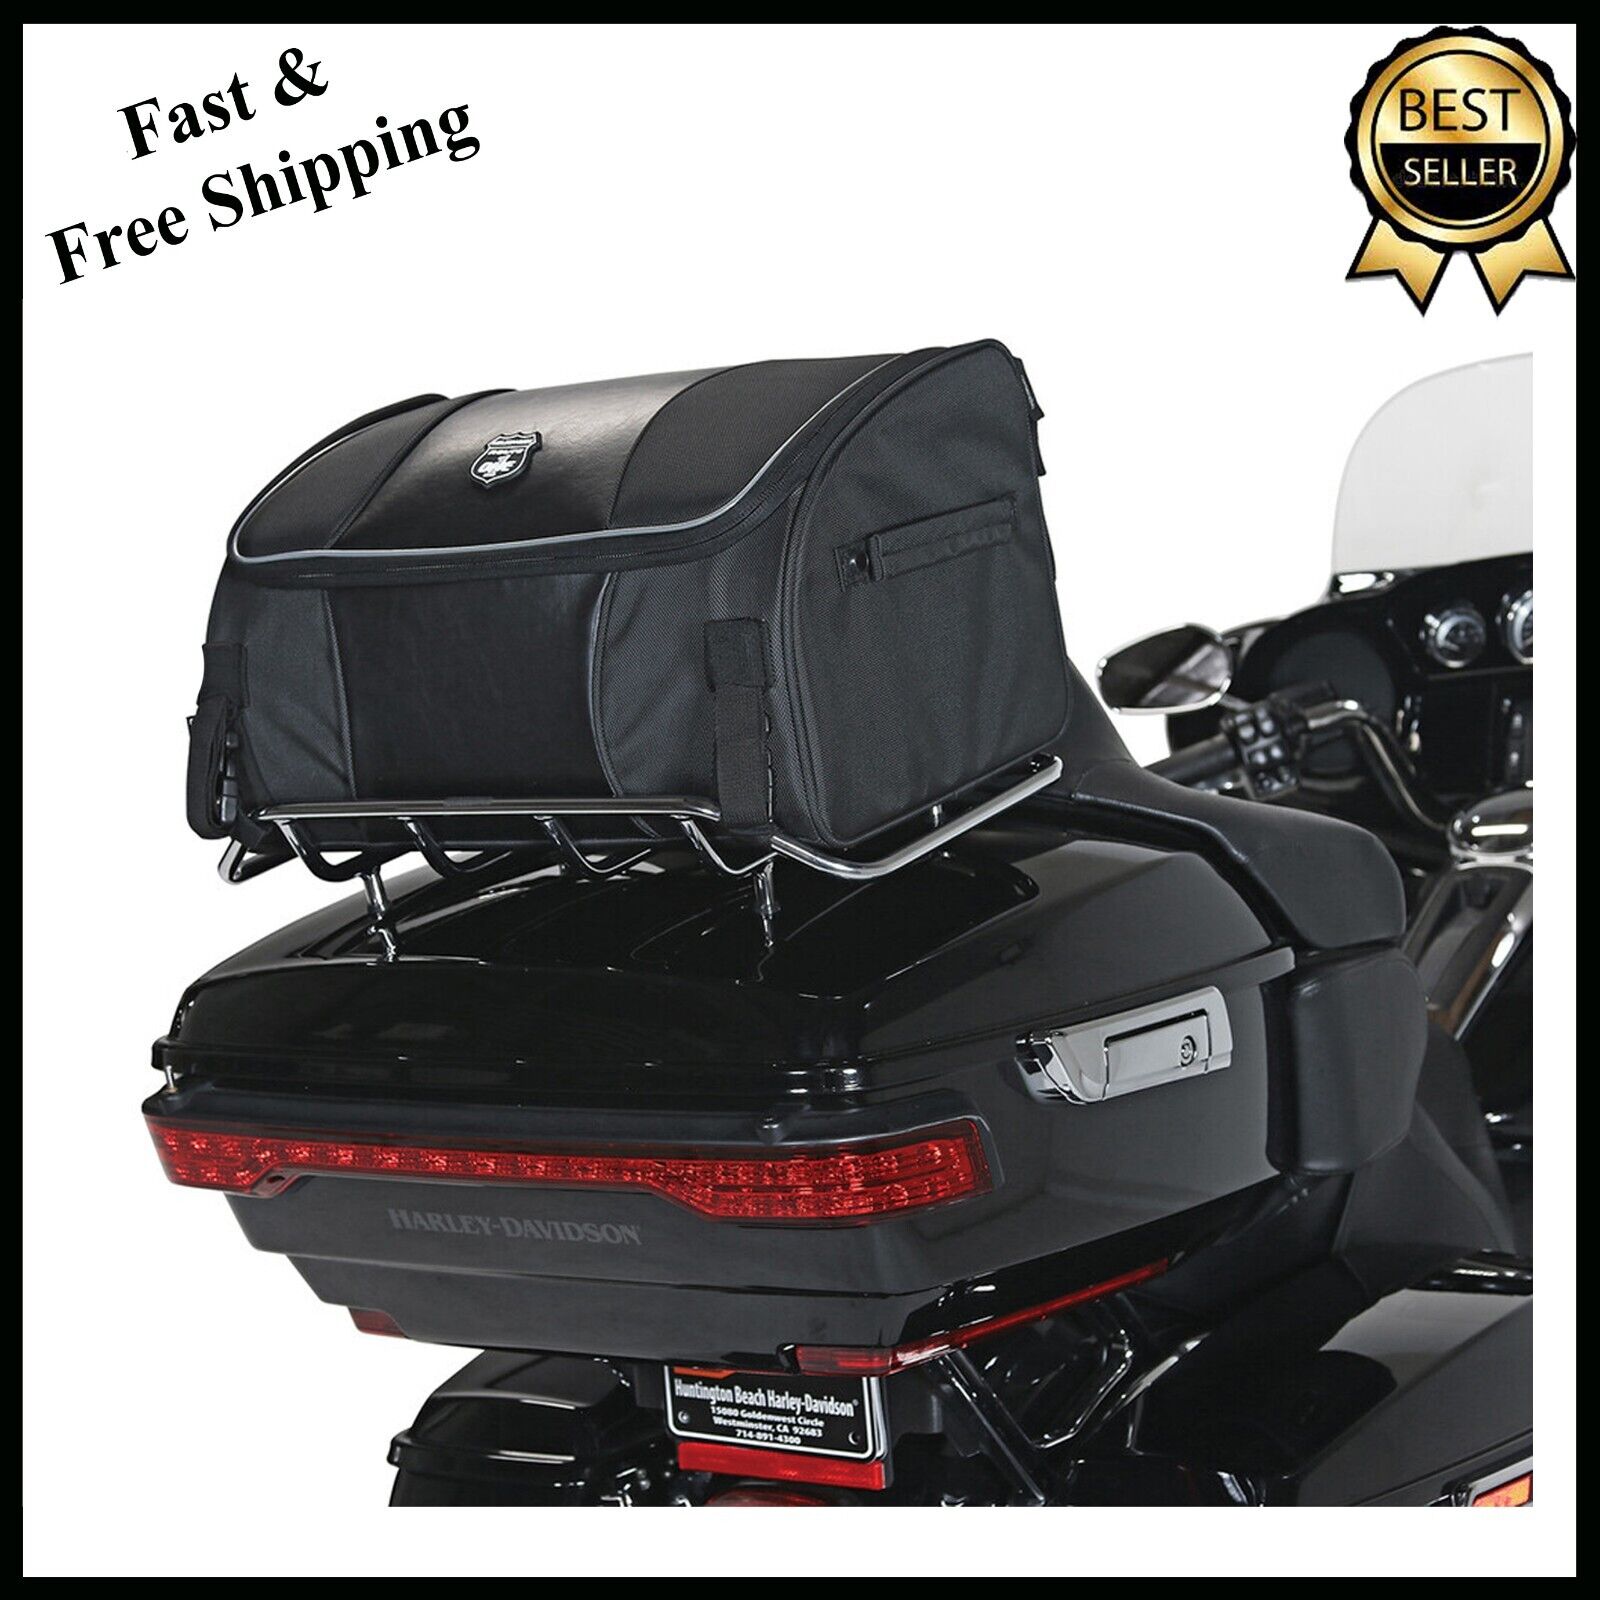 Nelson-Rigg Traveler Lite Trunk/rack Bag Nr-250 100% Waterproof Cover Includ